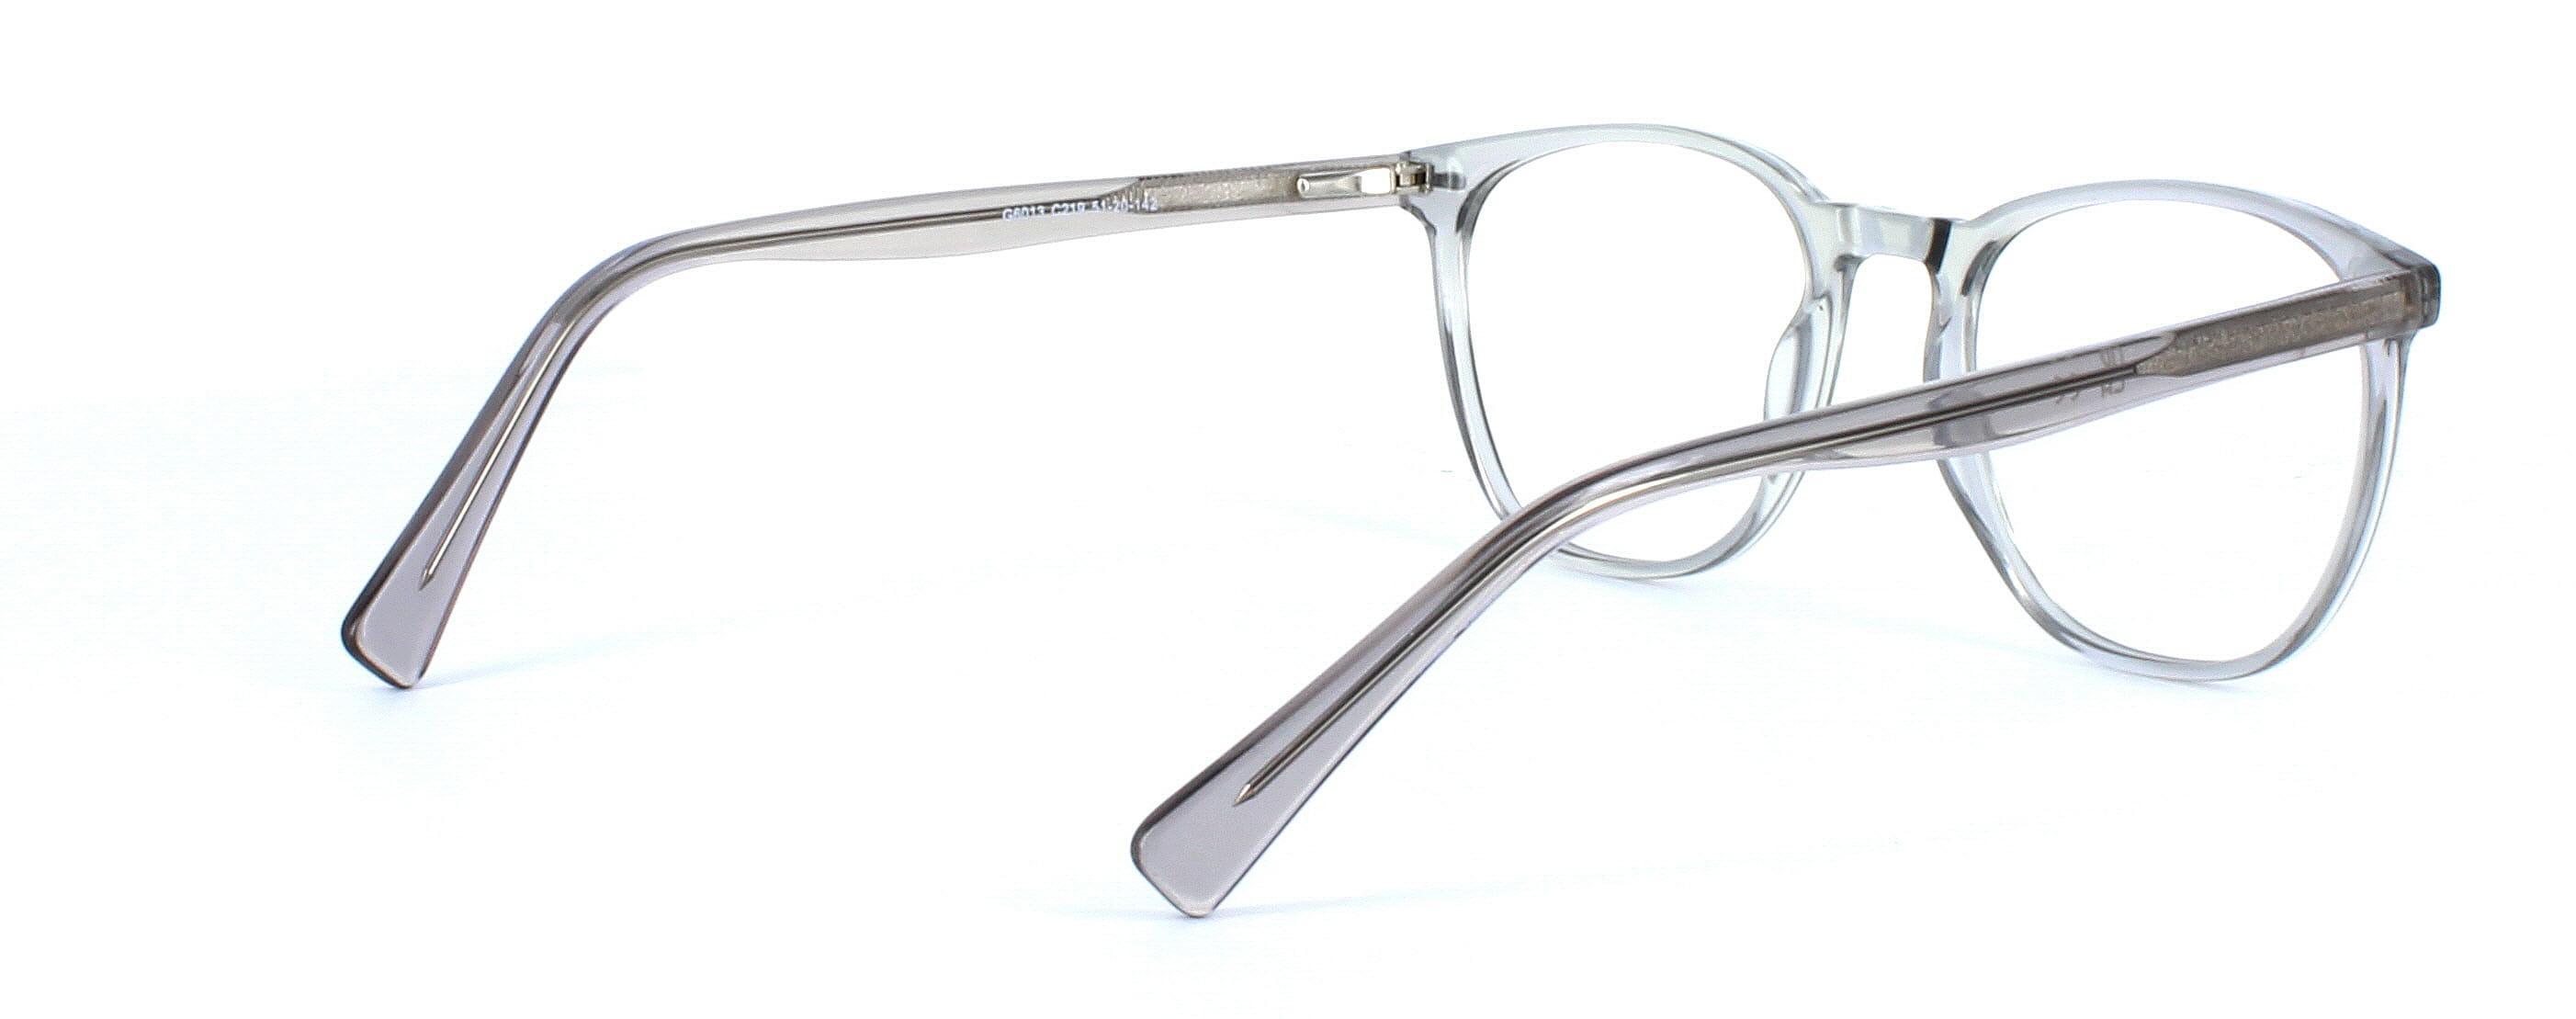 Hercules - Unisex plastic glasses frame - Crystal grey - image view 4